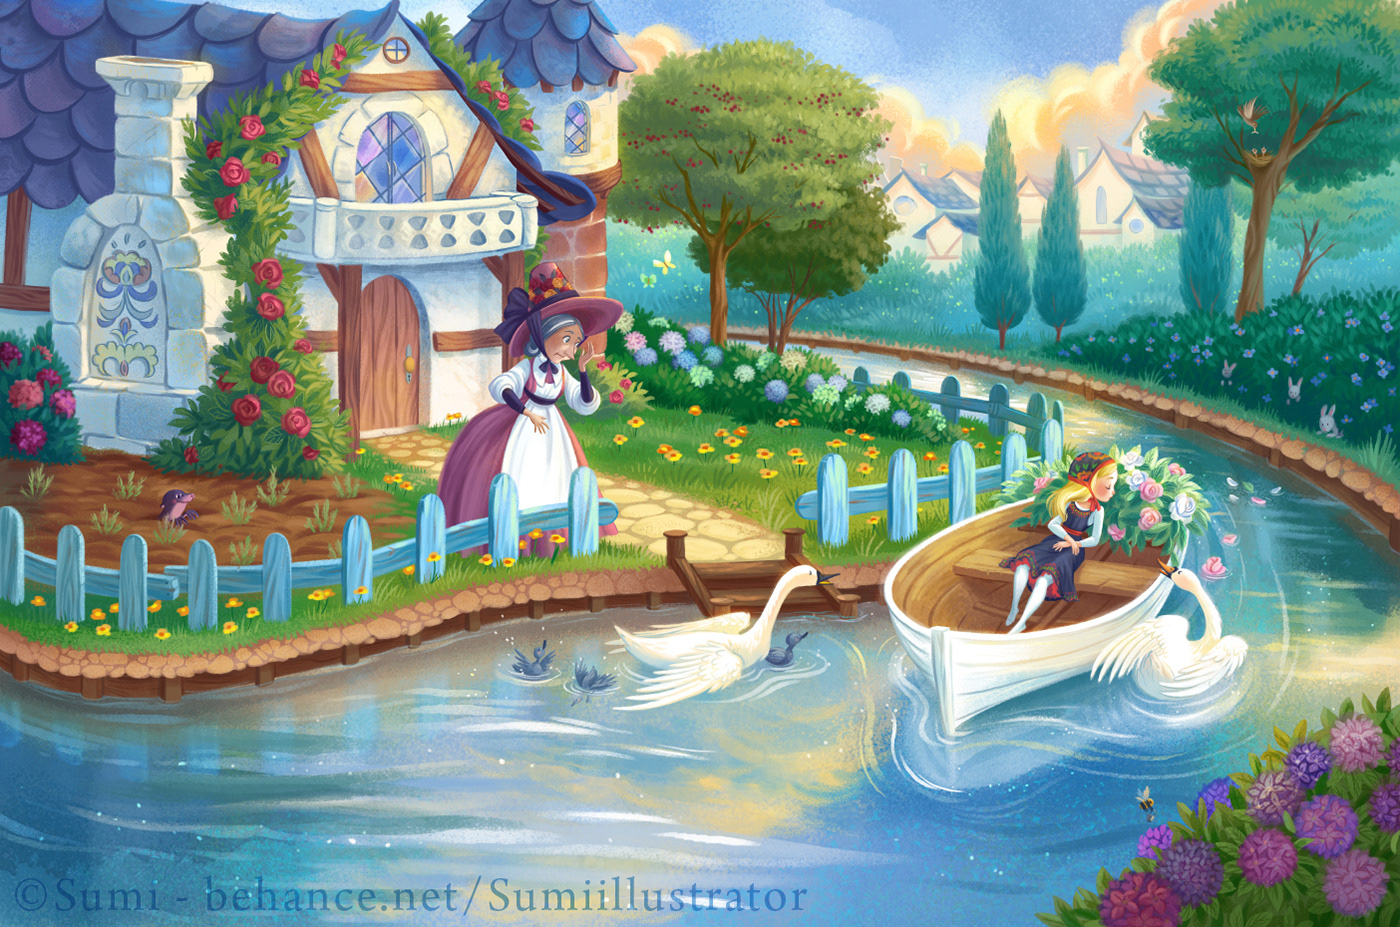 andersen children's book kidlit literature children digital painting Digital Art  illustrated fairytale Classic